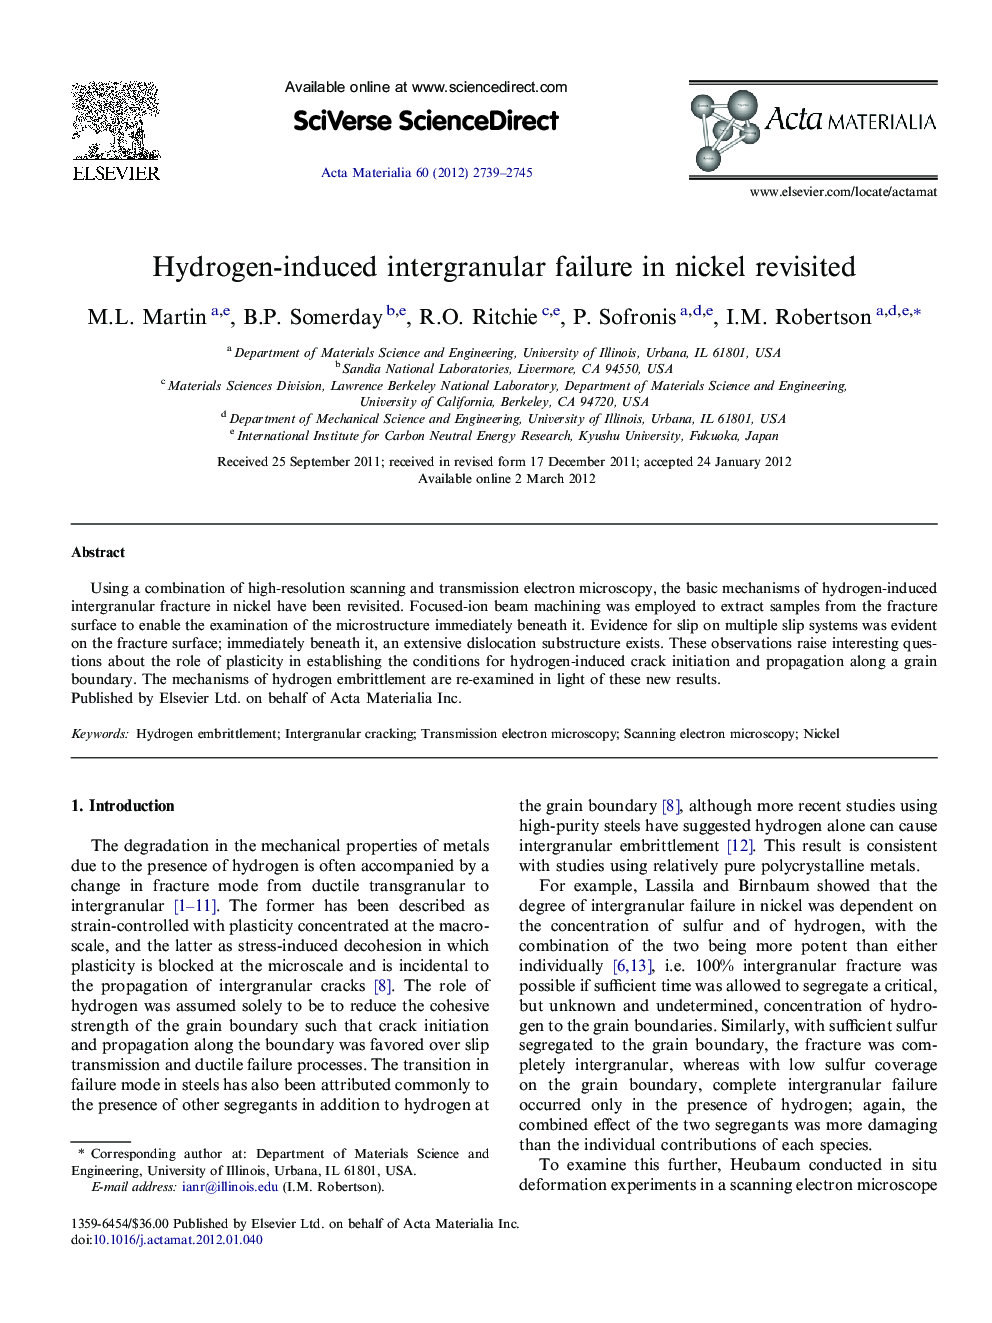 Hydrogen-induced intergranular failure in nickel revisited